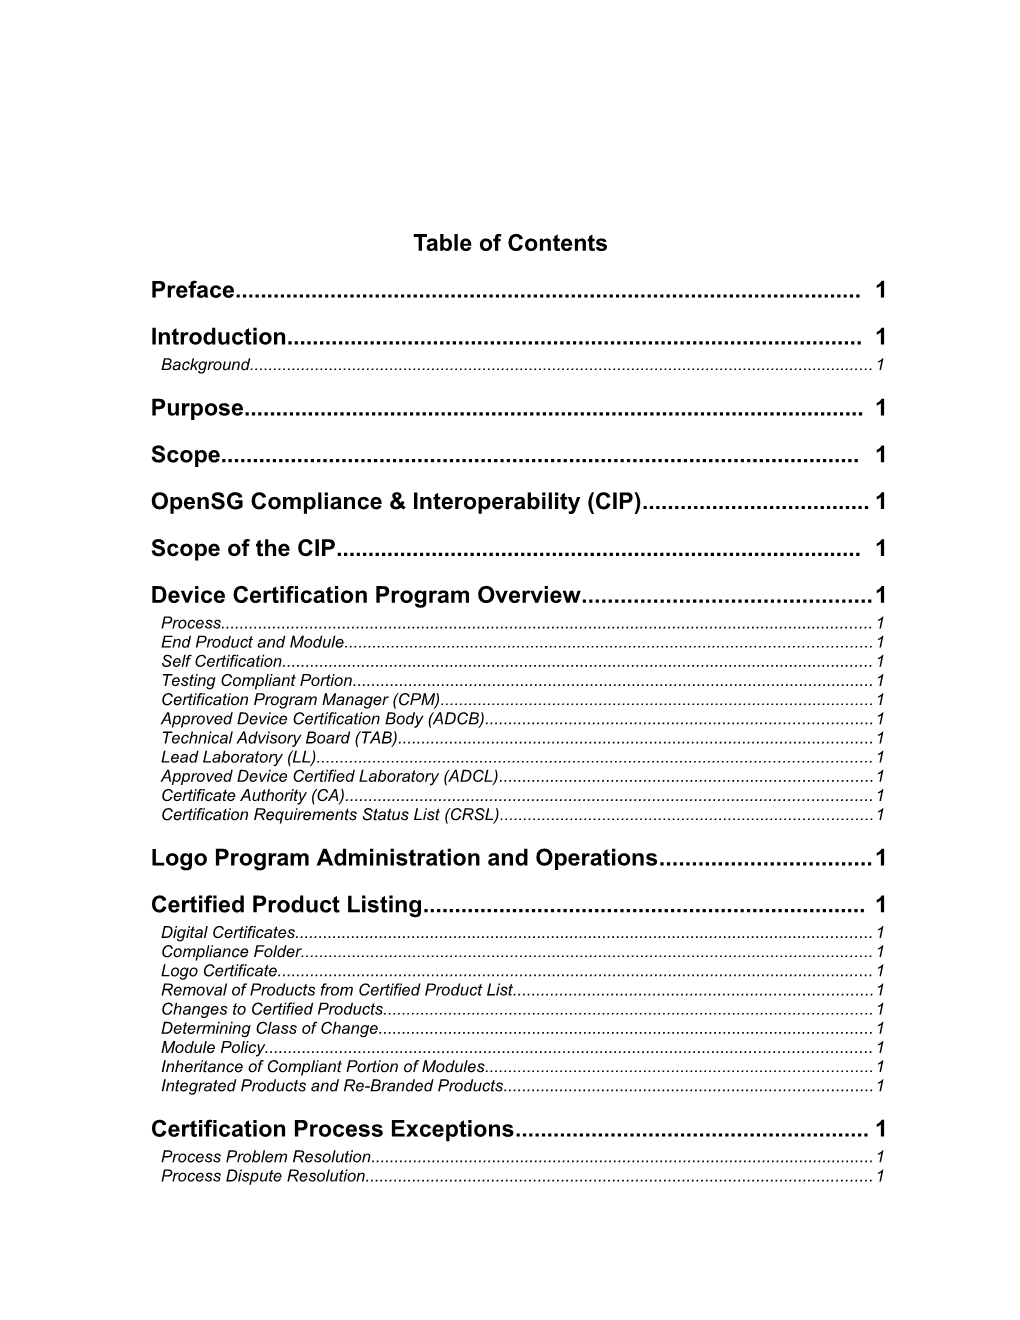 Opensg Compliance & Interoperability (CIP)